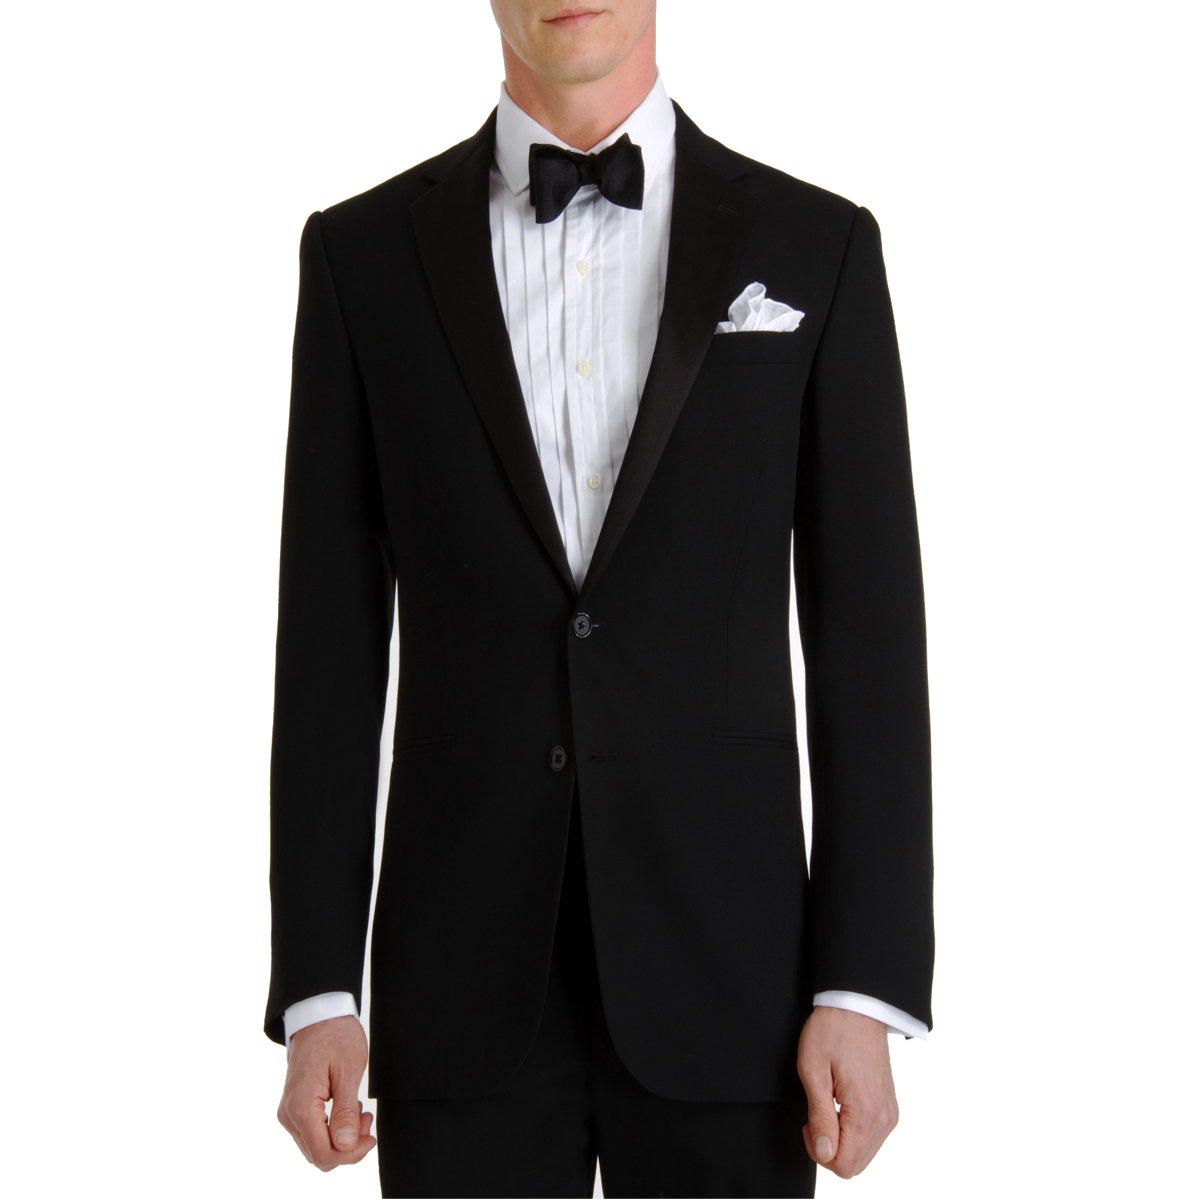 Lyst - Ralph Lauren Black Label Anthony Two-button Tuxedo in Black for Men